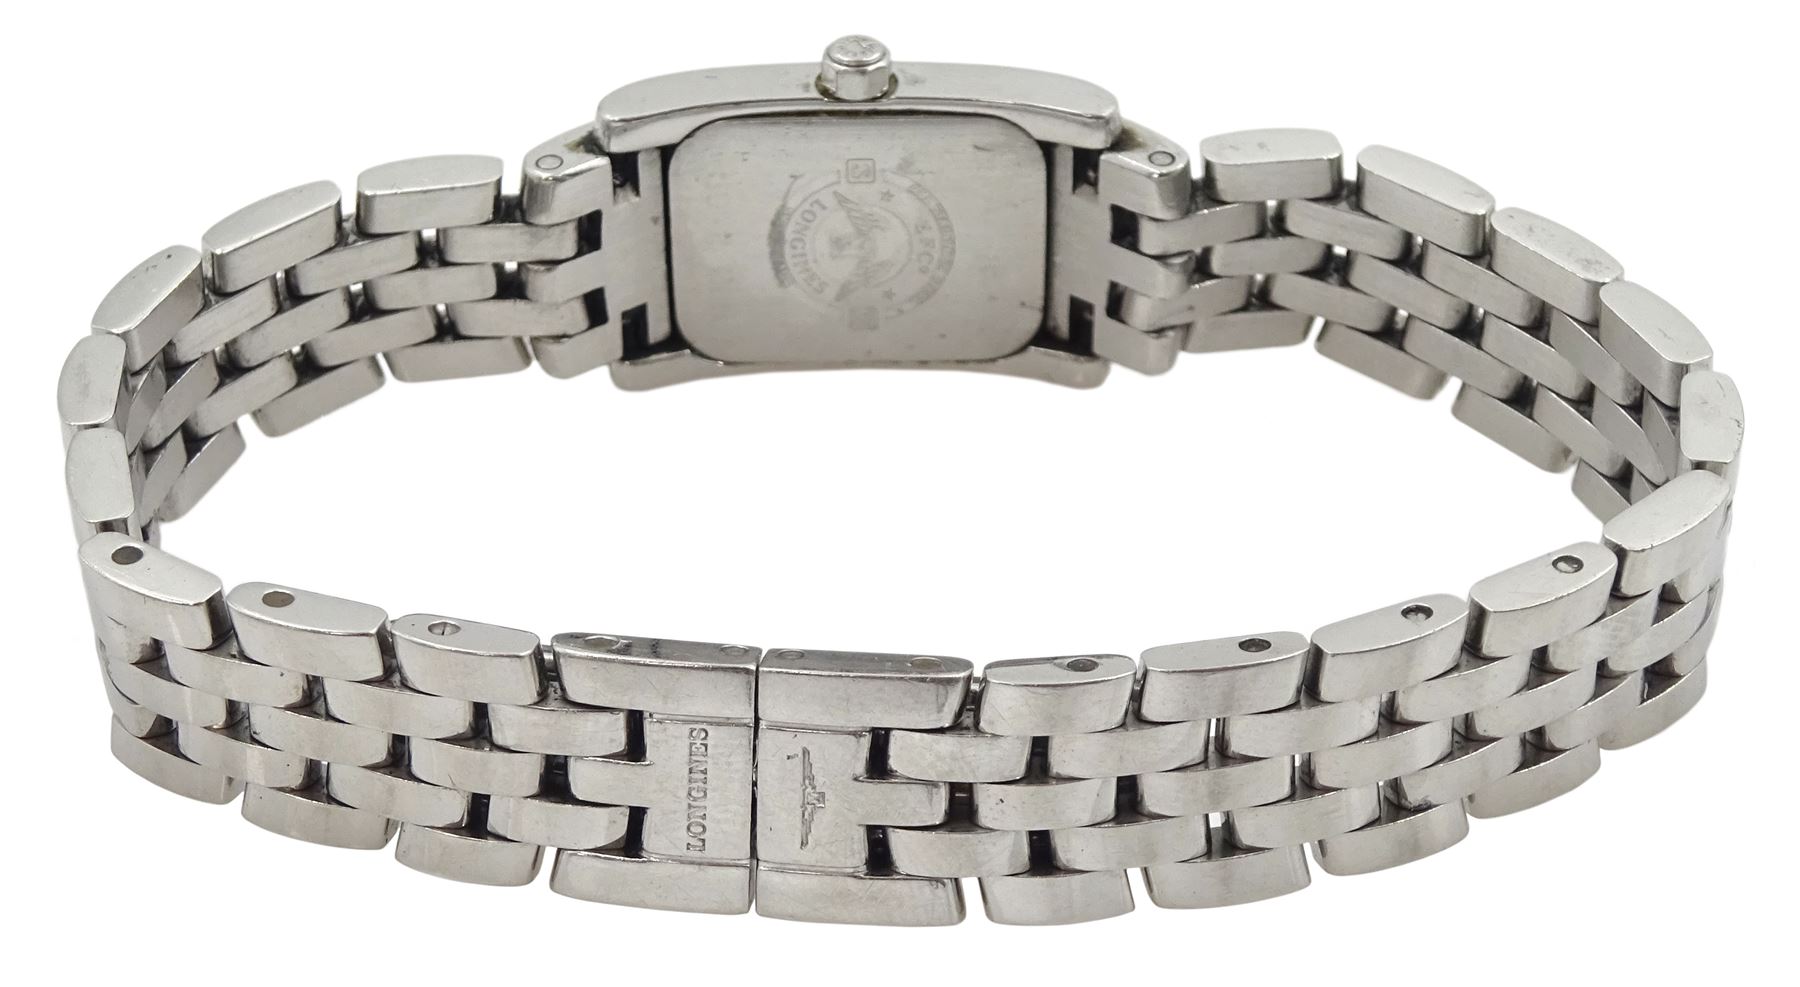 Longines DolceVita ladies stainless steel quartz wristwatch - Image 3 of 4